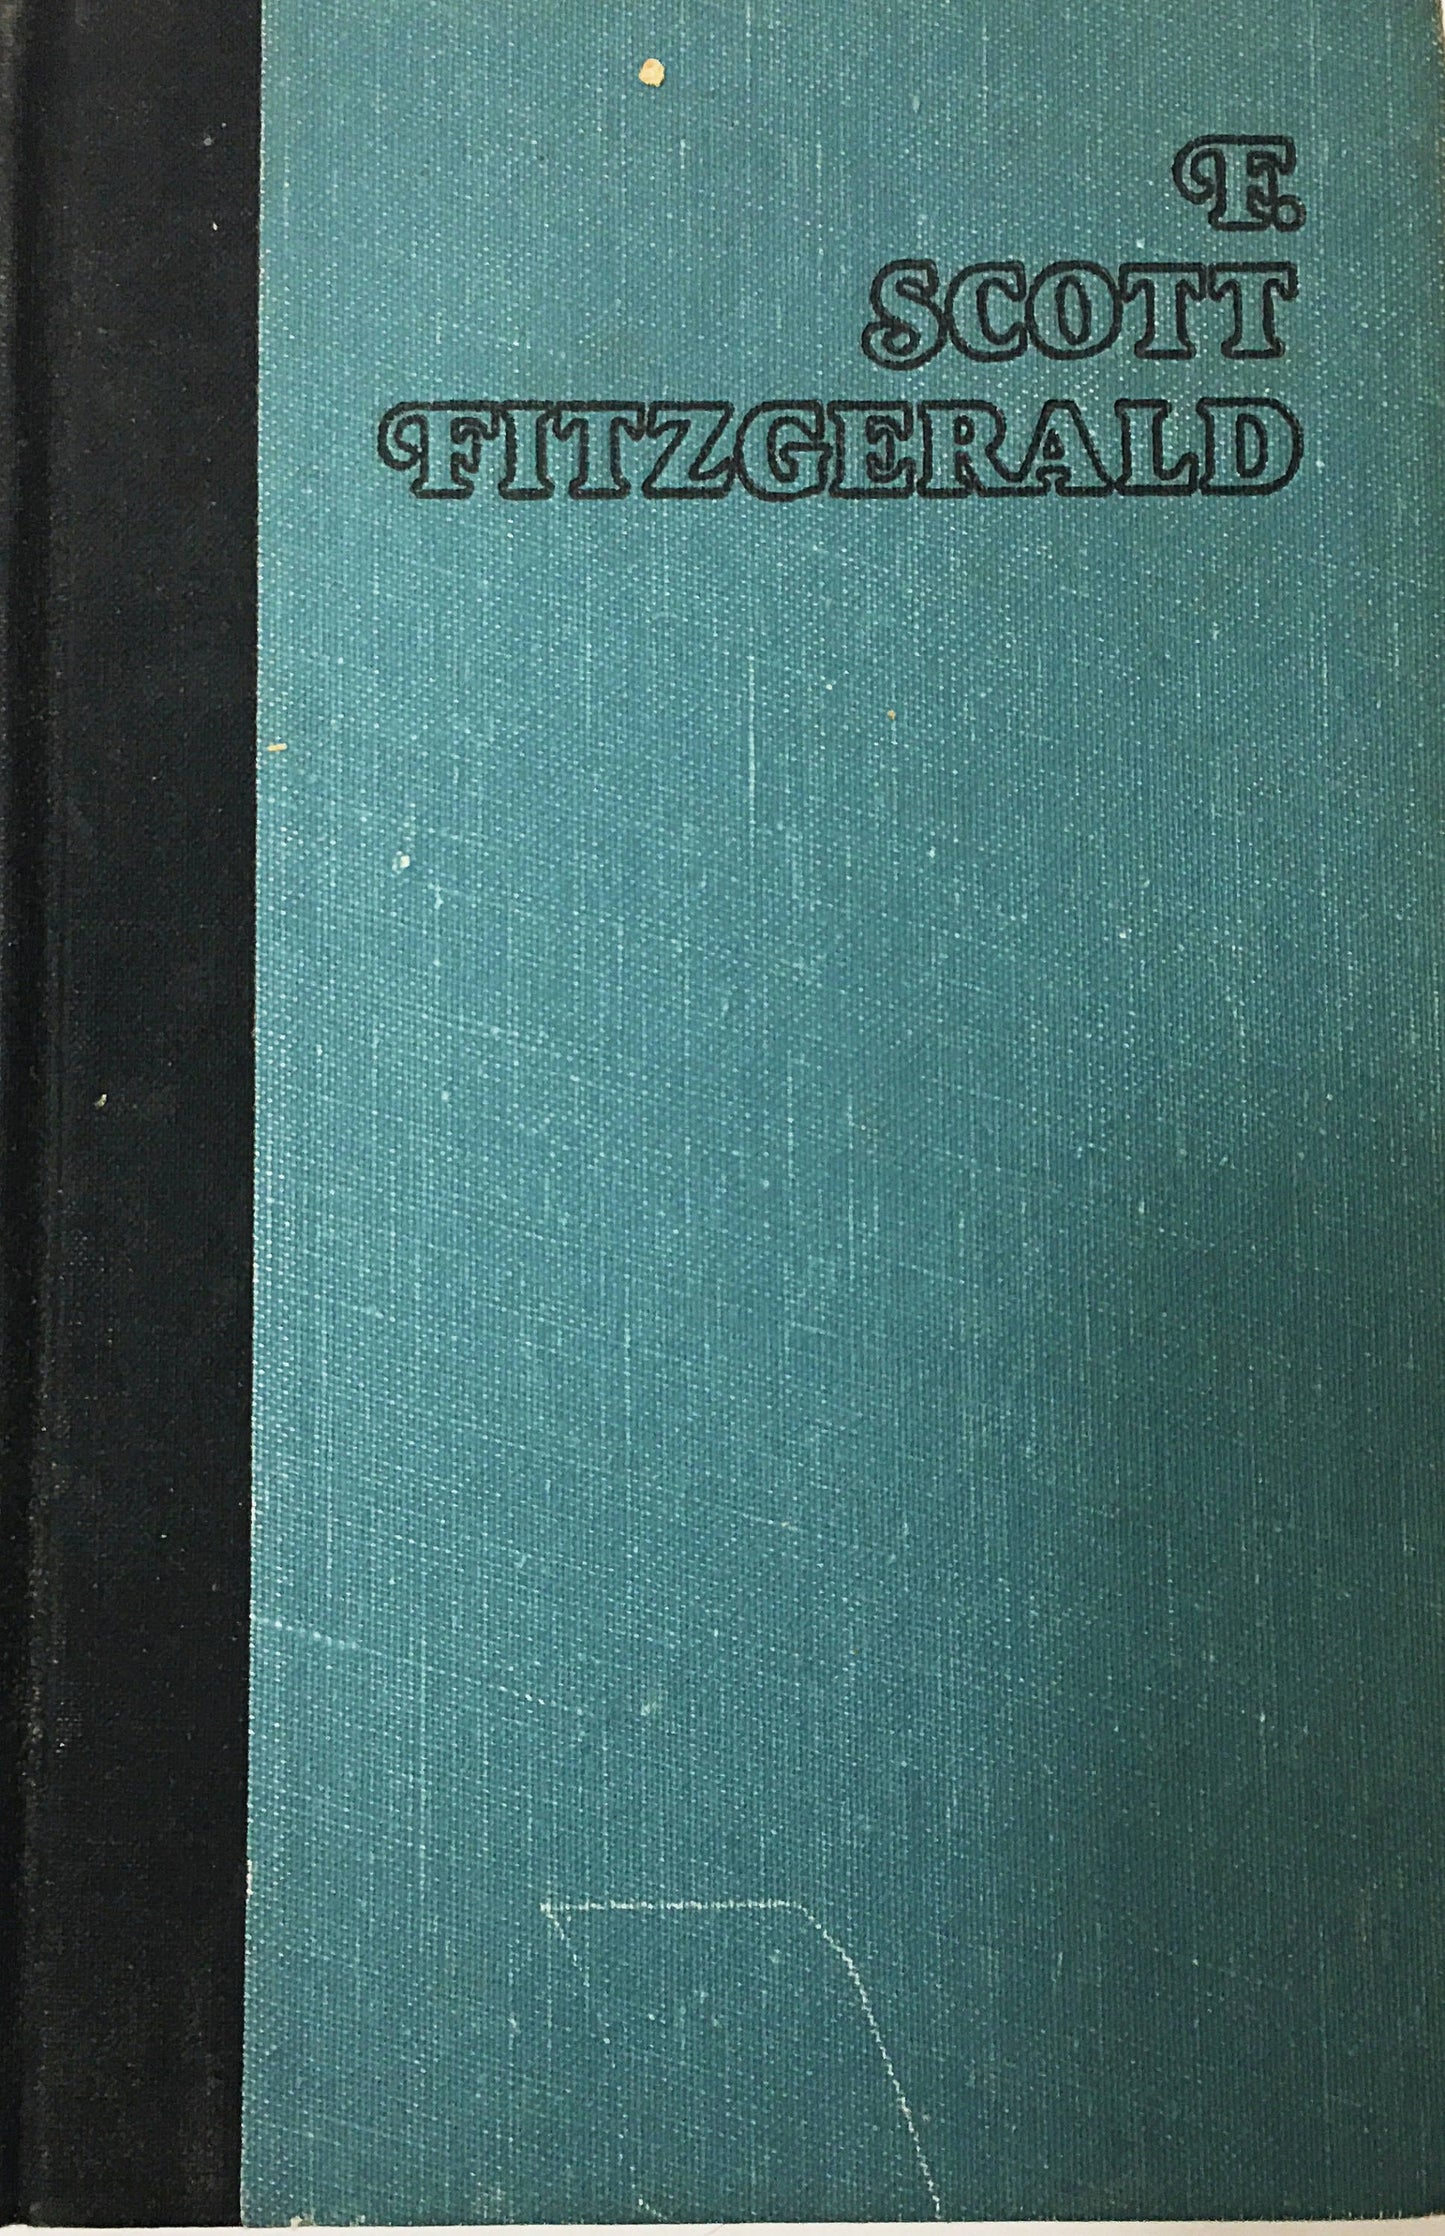 Tender is the Night book circa 1962. F. Scott Fitzgerald. Scribner, NY. Beautiful work of classic American literature!